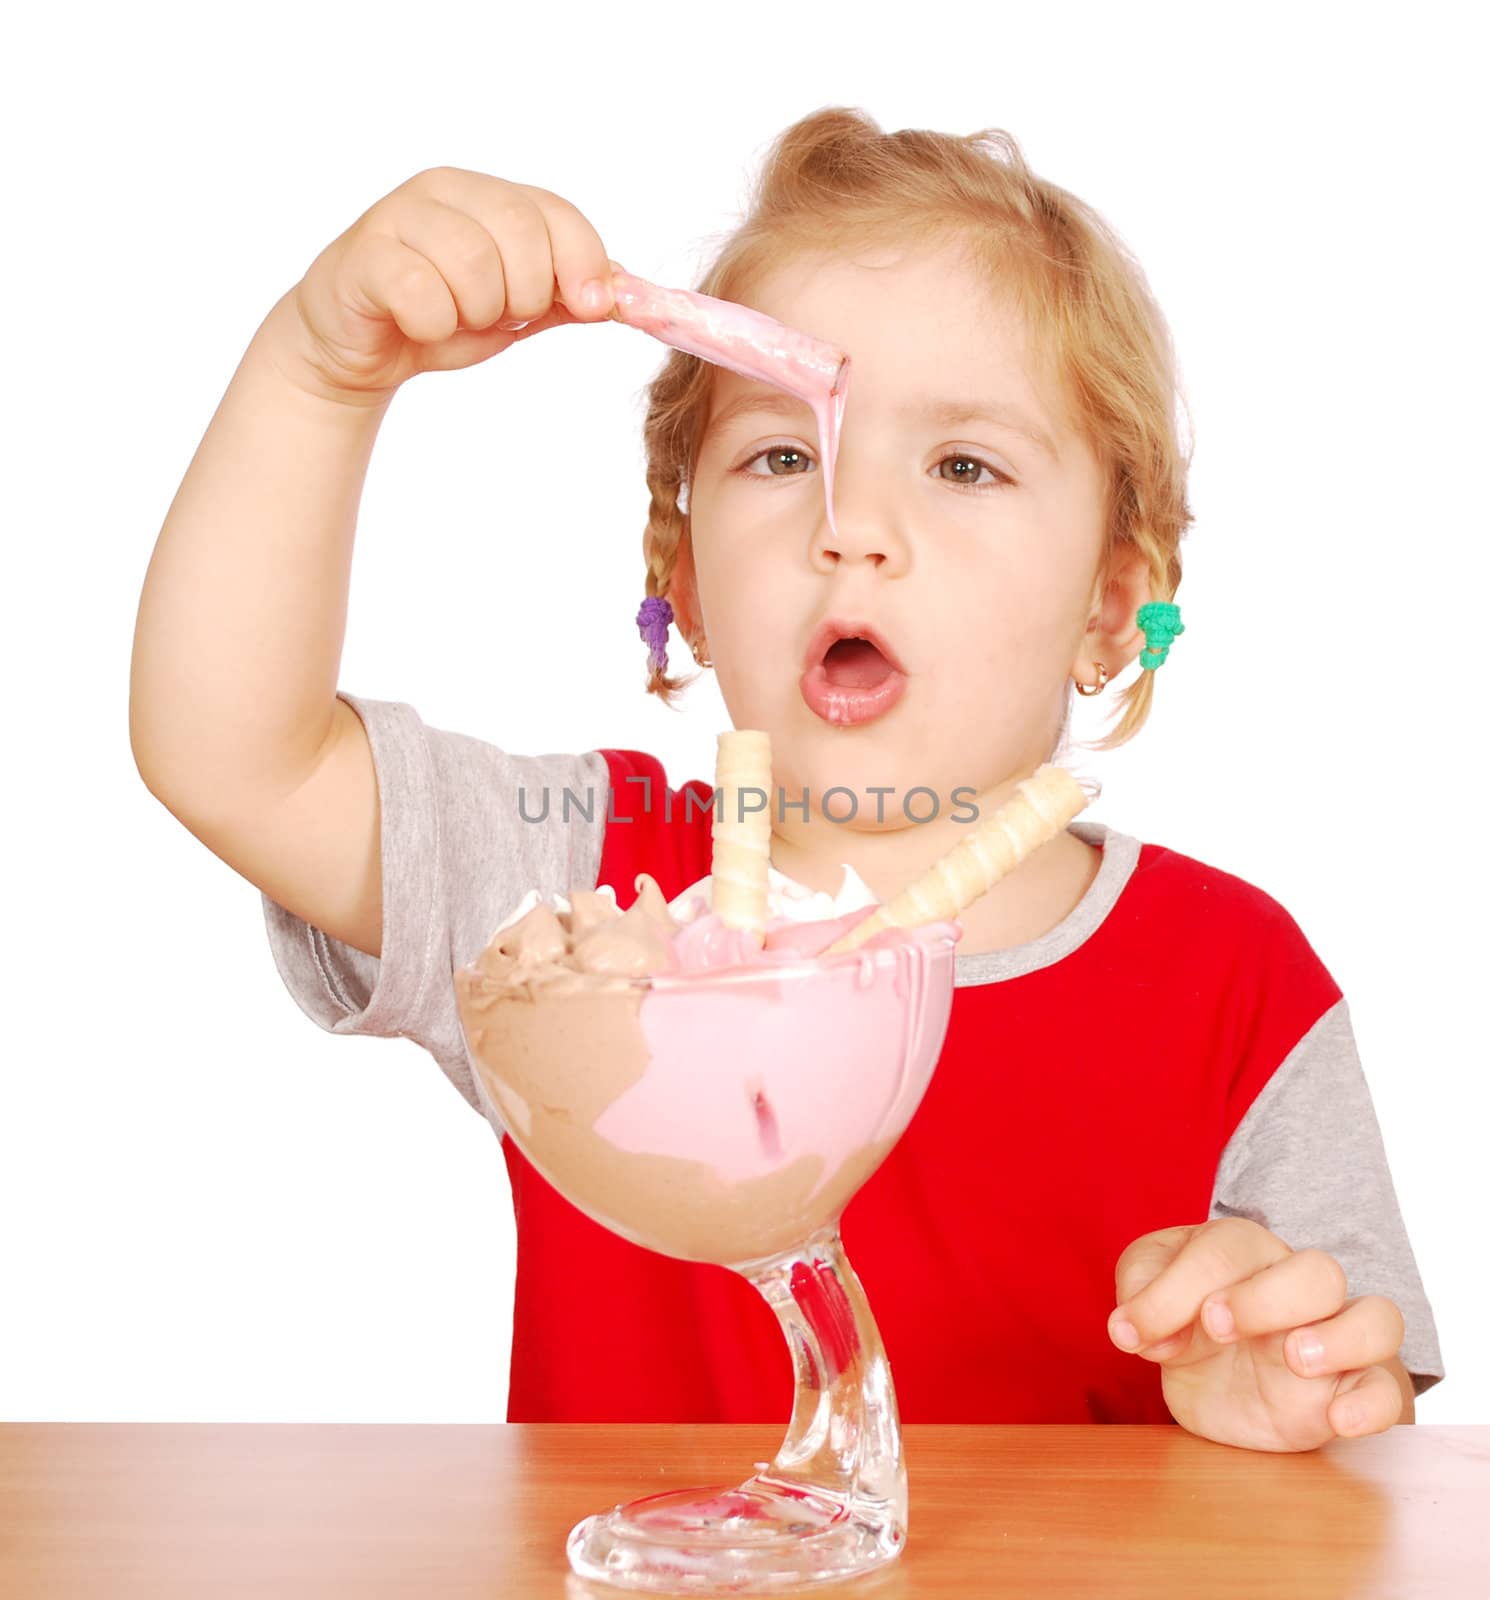 Little girl enjoy in ice cream studio shot